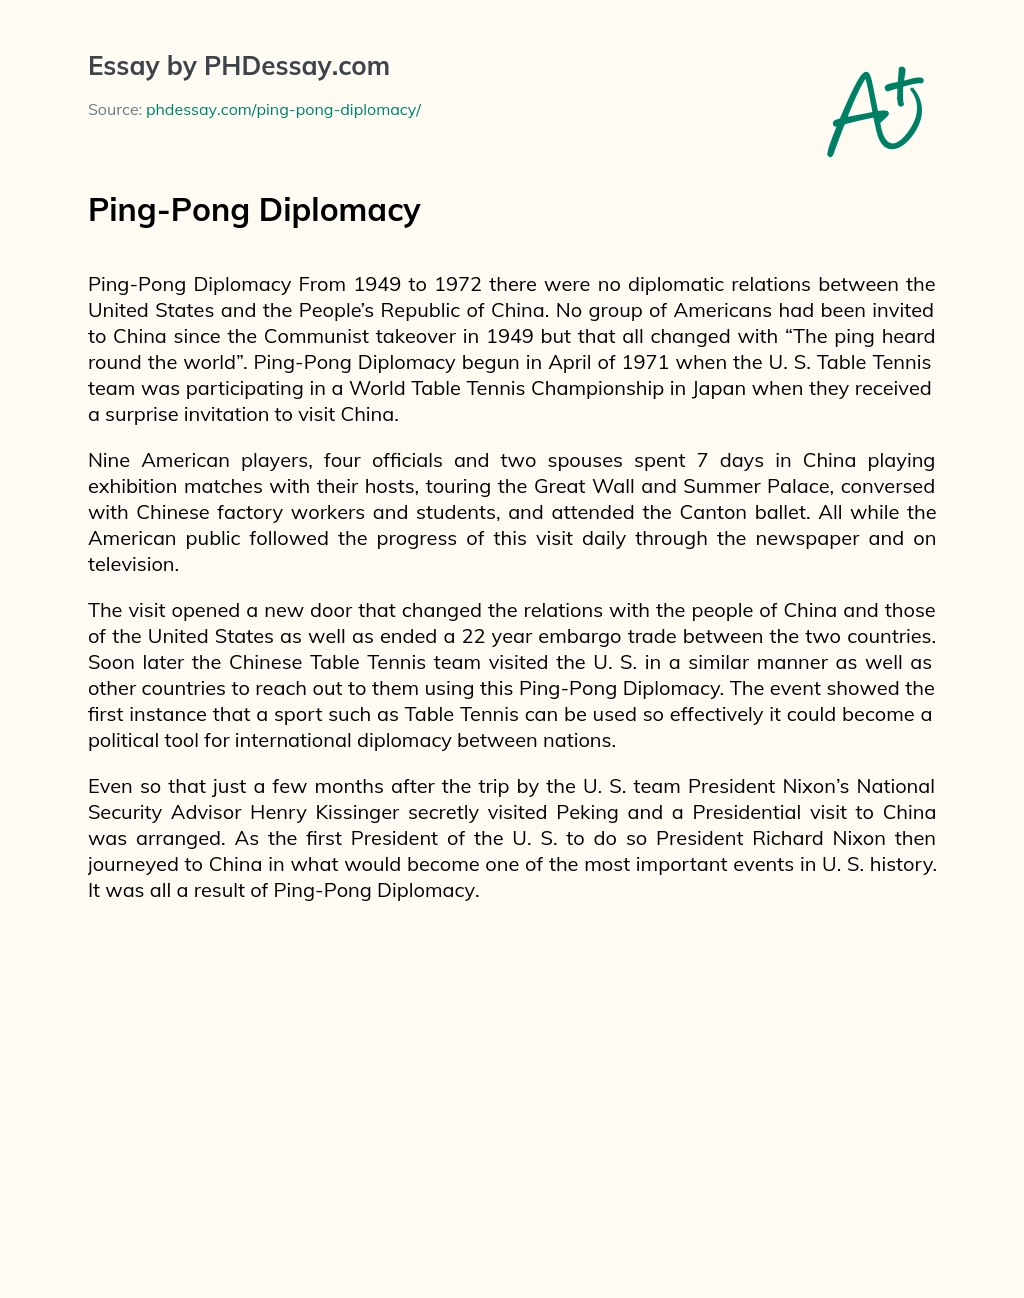 Ping-Pong Diplomacy essay